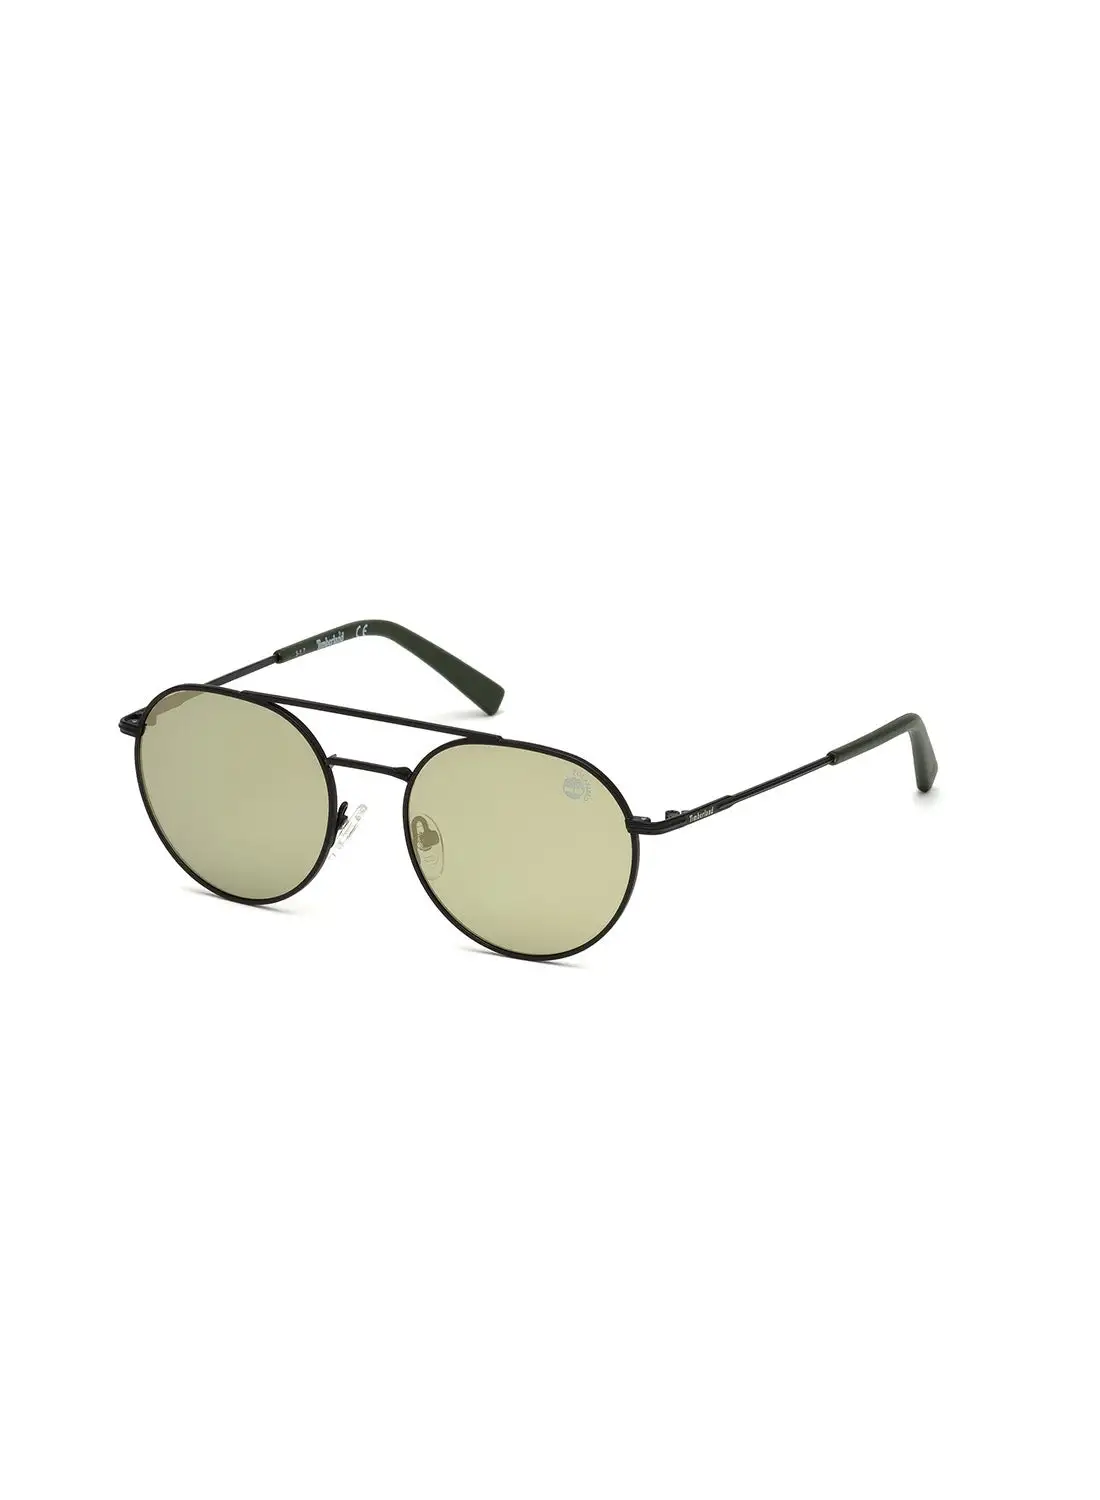 Timberland Men's Polarized Round Sunglasses - TB912302R52 - Lens Size: 52 Mm